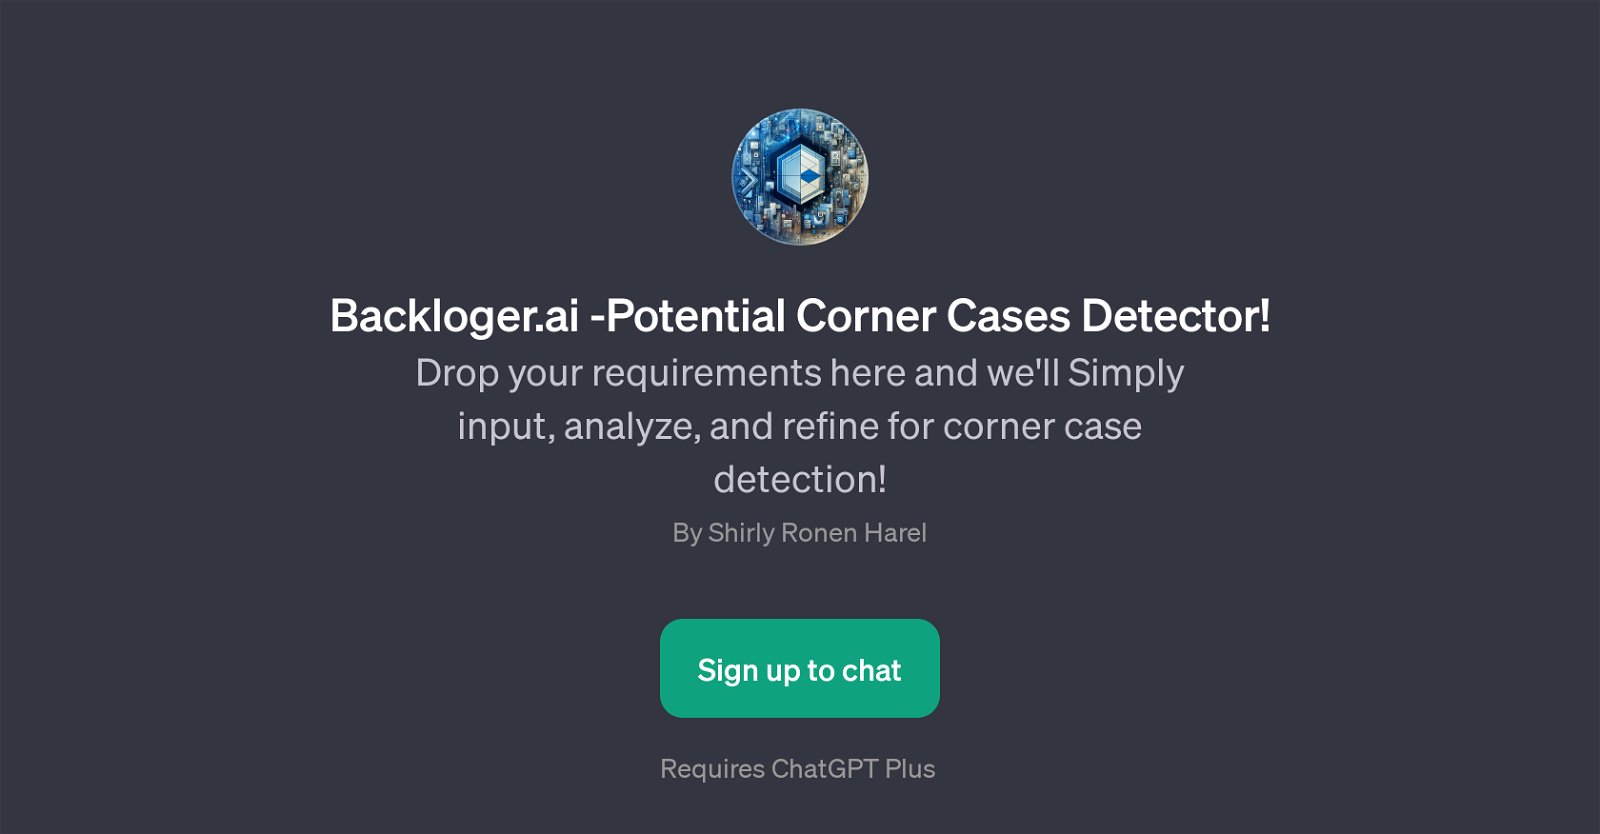 Backloger.ai - Potential Corner Cases Detector website